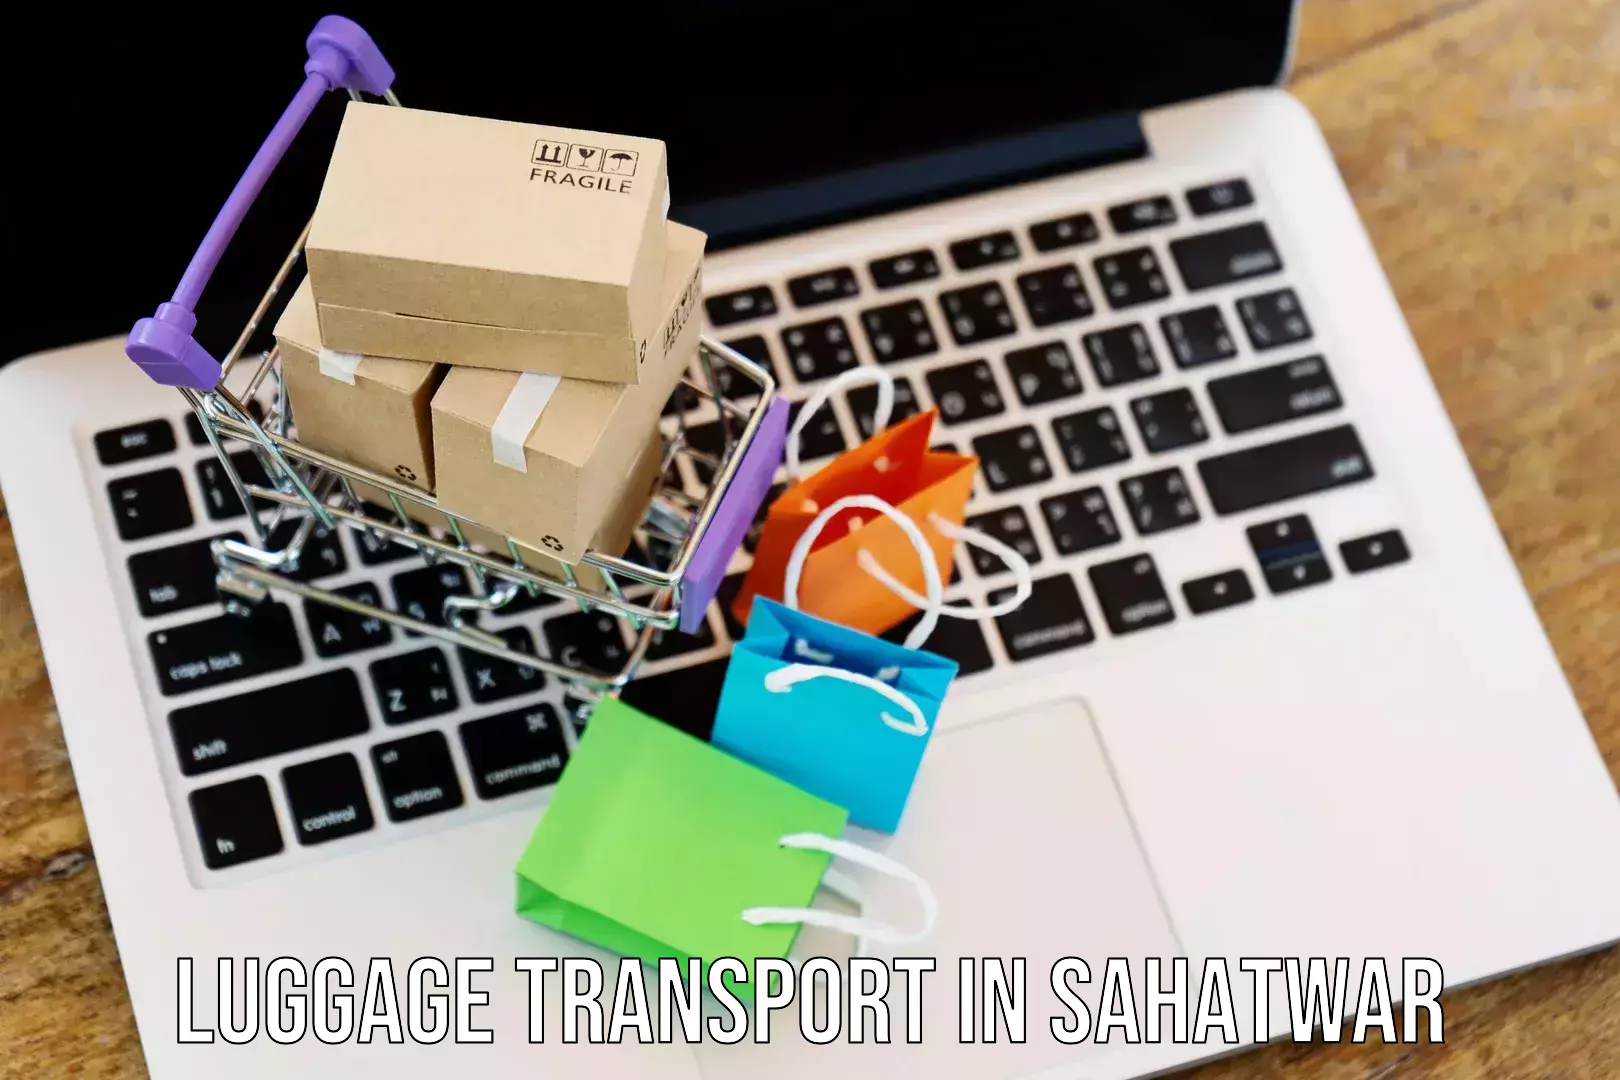 Luggage shipping options in Sahatwar